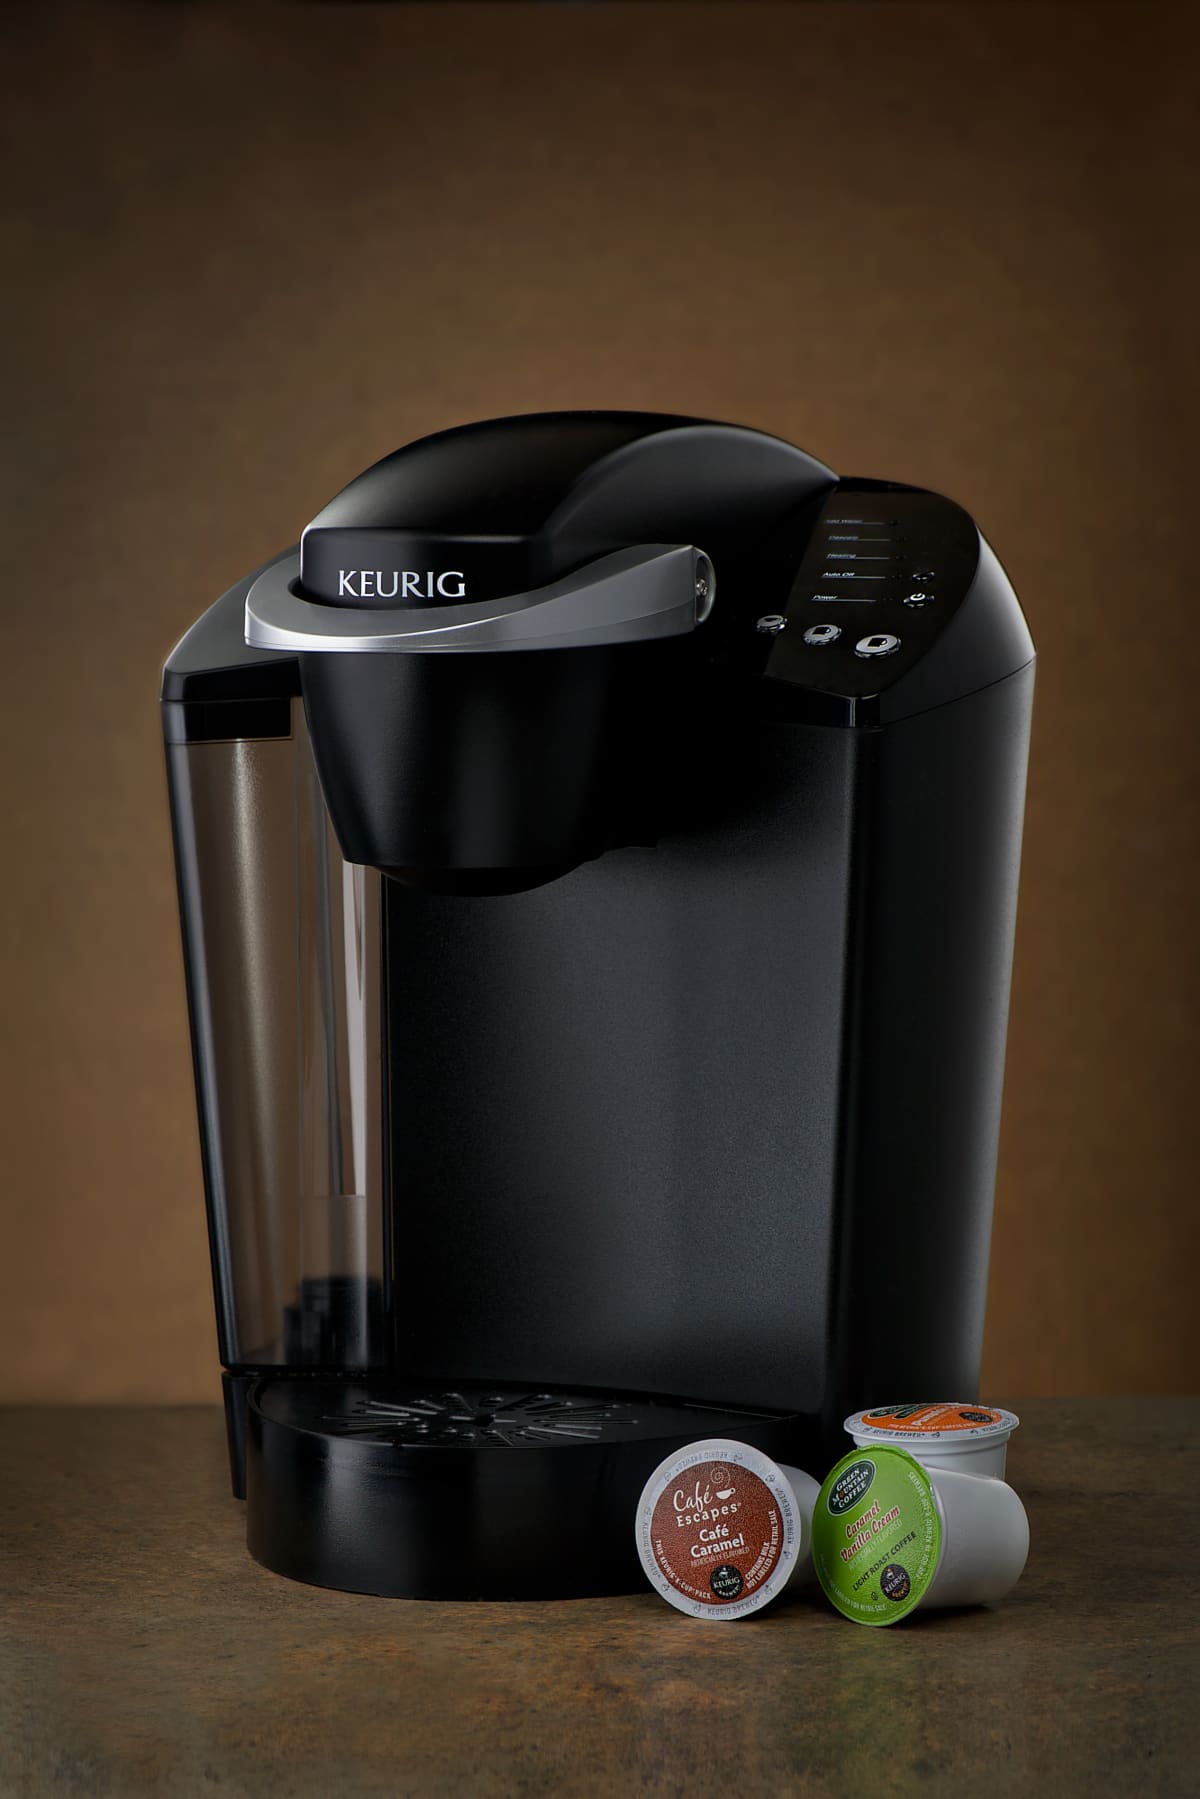 Monument, Colorado, USA - December 26, 2014: Keurig k-cup coffee maker with three k-cup pods. Keurig is popular